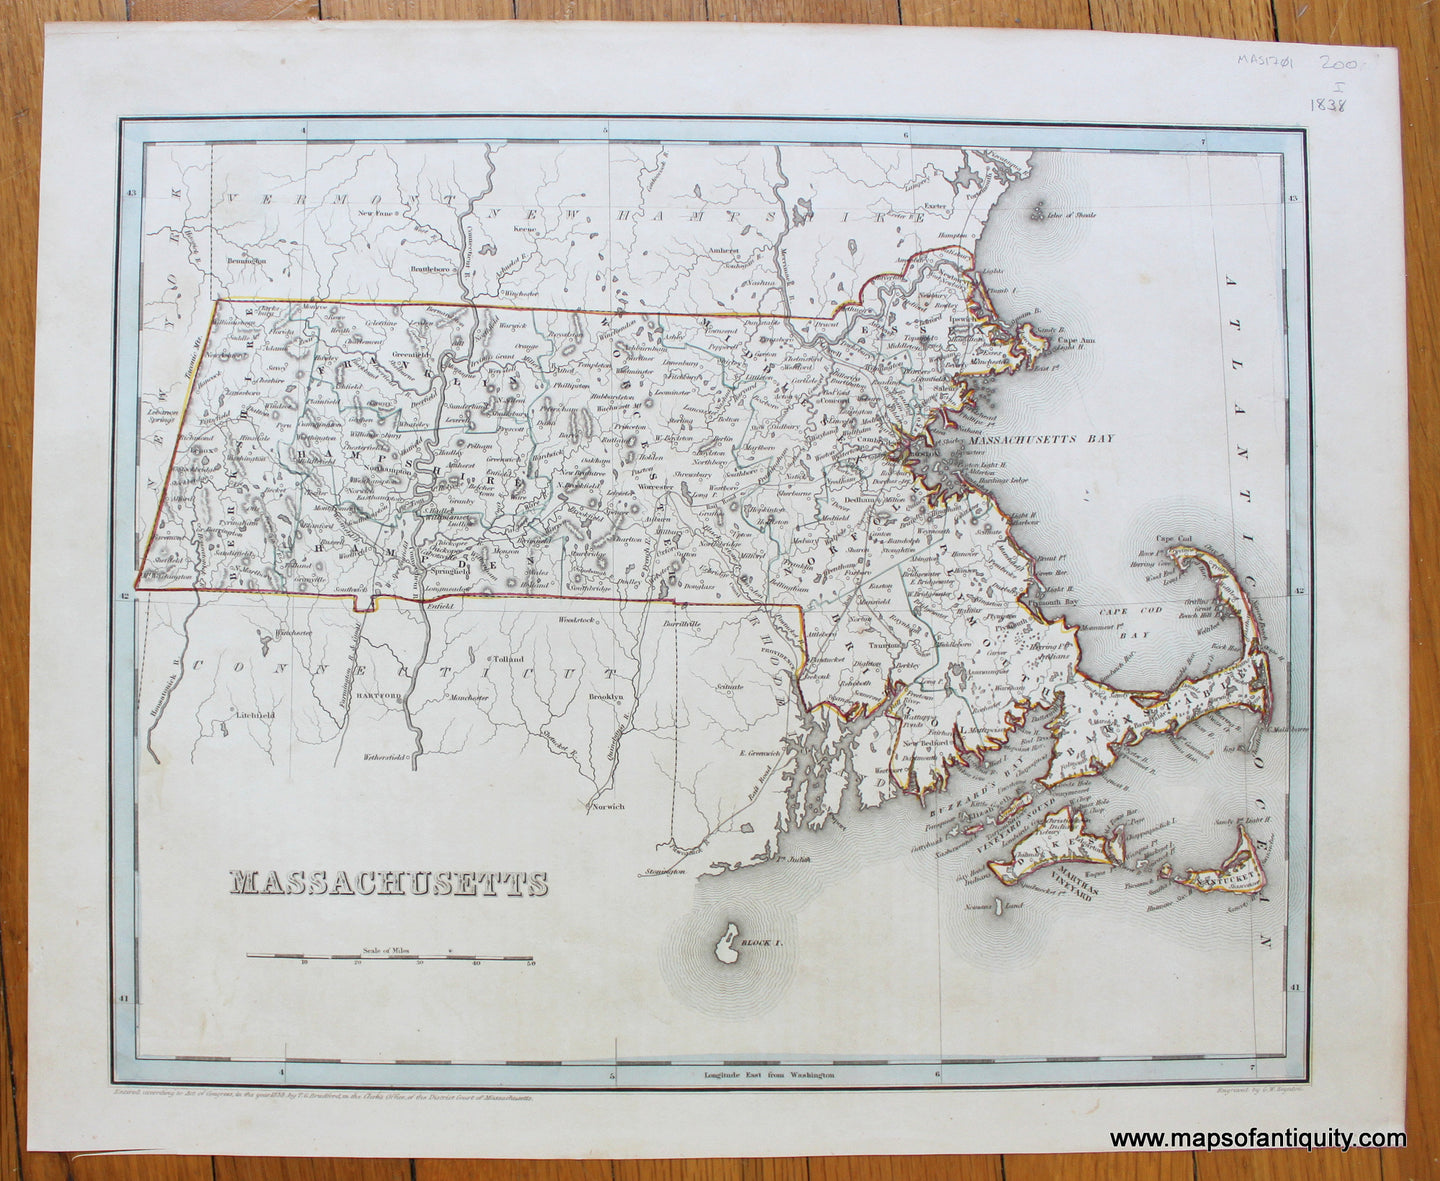 Antique-Map-Massachusetts-1838-Bradford-1830s-1800s-19th-century-Maps-of-Antiquity